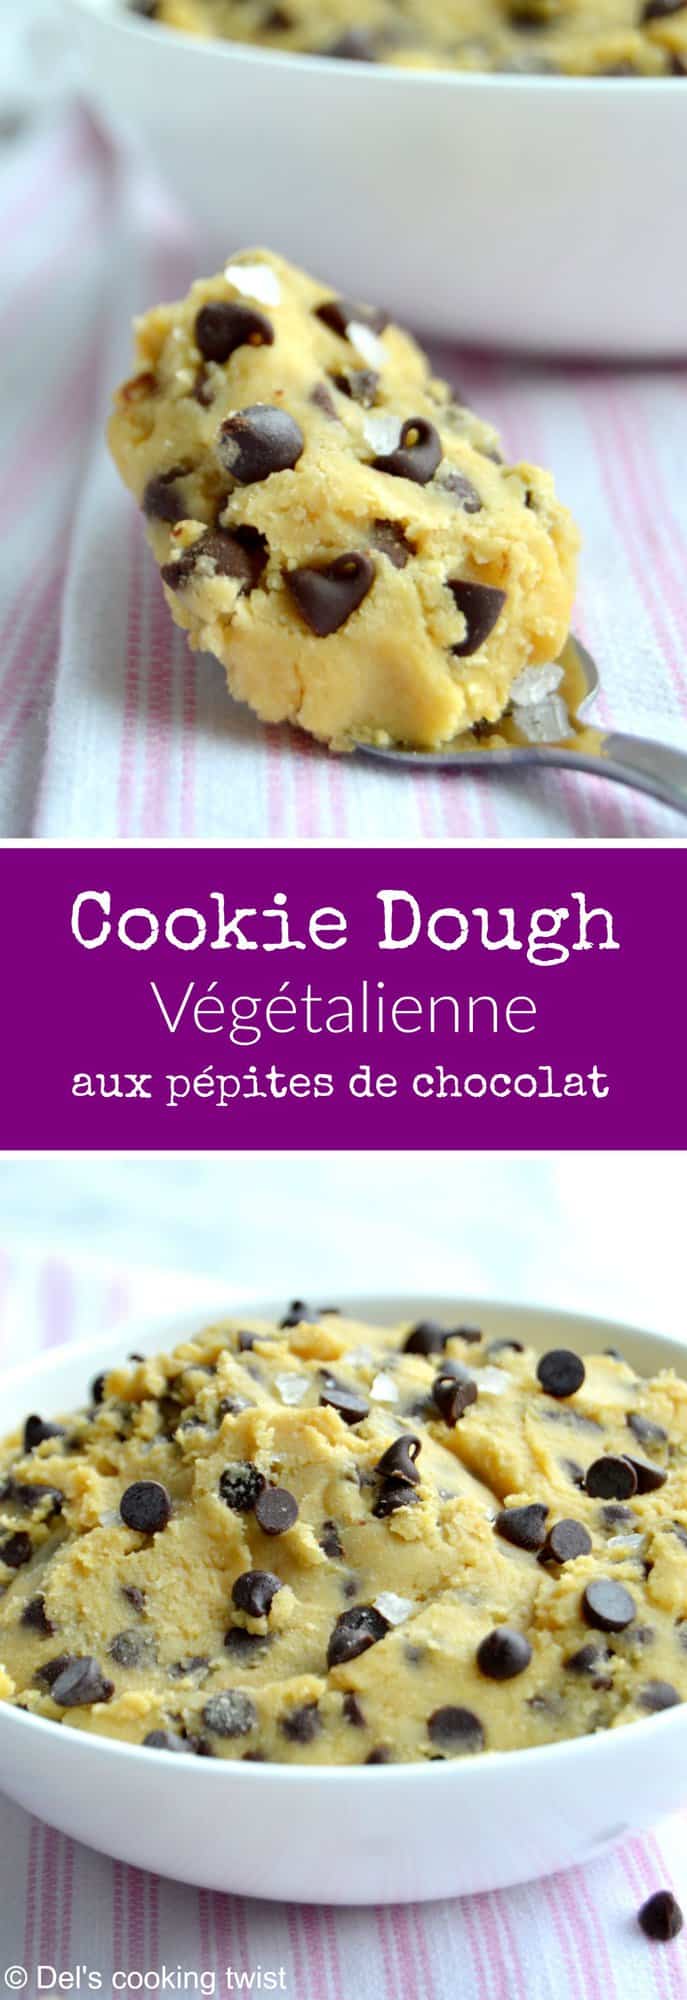 Cookie dough vegan aux pepites de chocolat